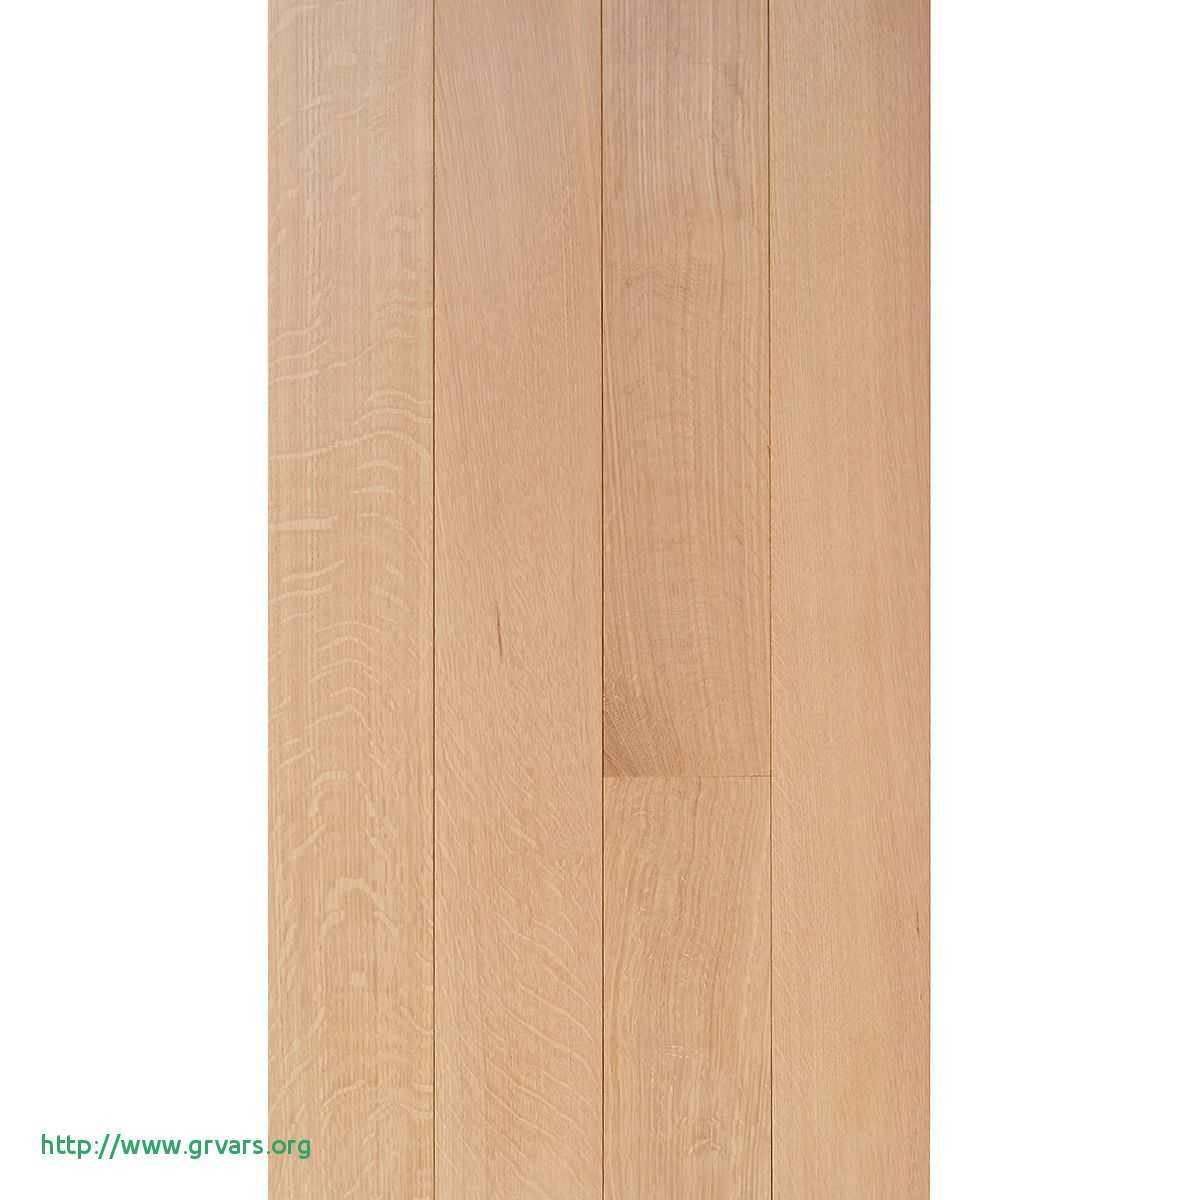 hardwood flooring grades quality of 16 beau prefinished quarter sawn white oak flooring ideas blog with regard to prefinished quarter sawn white oak flooring alagant quarter sawn white oak 3 4